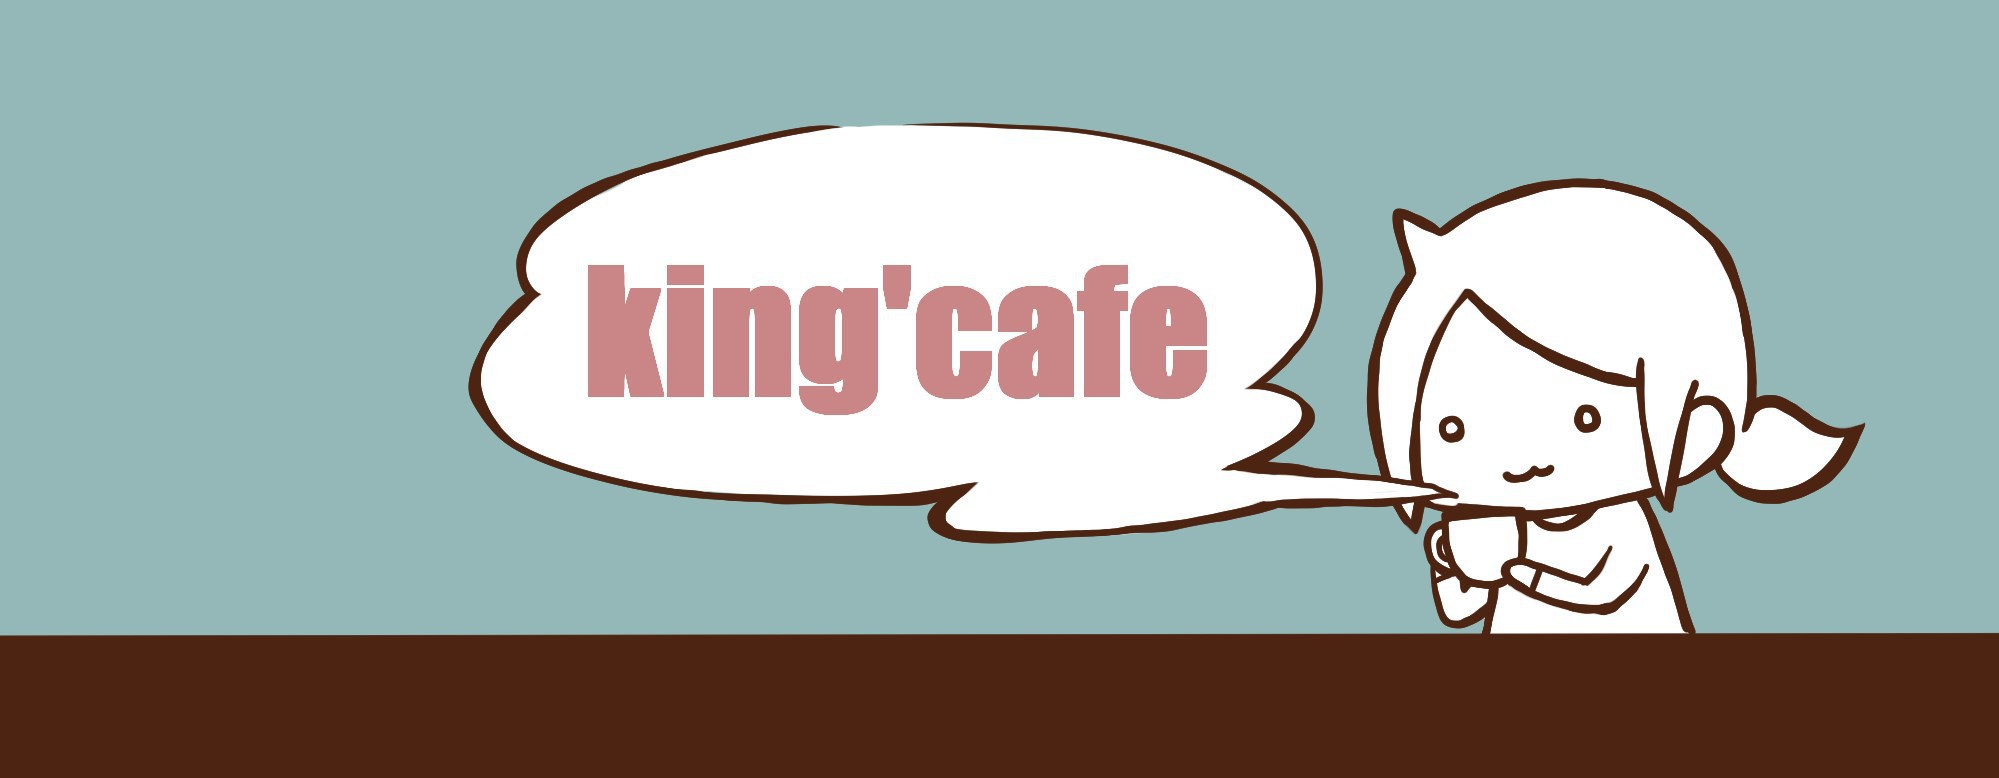 king’s Cafe